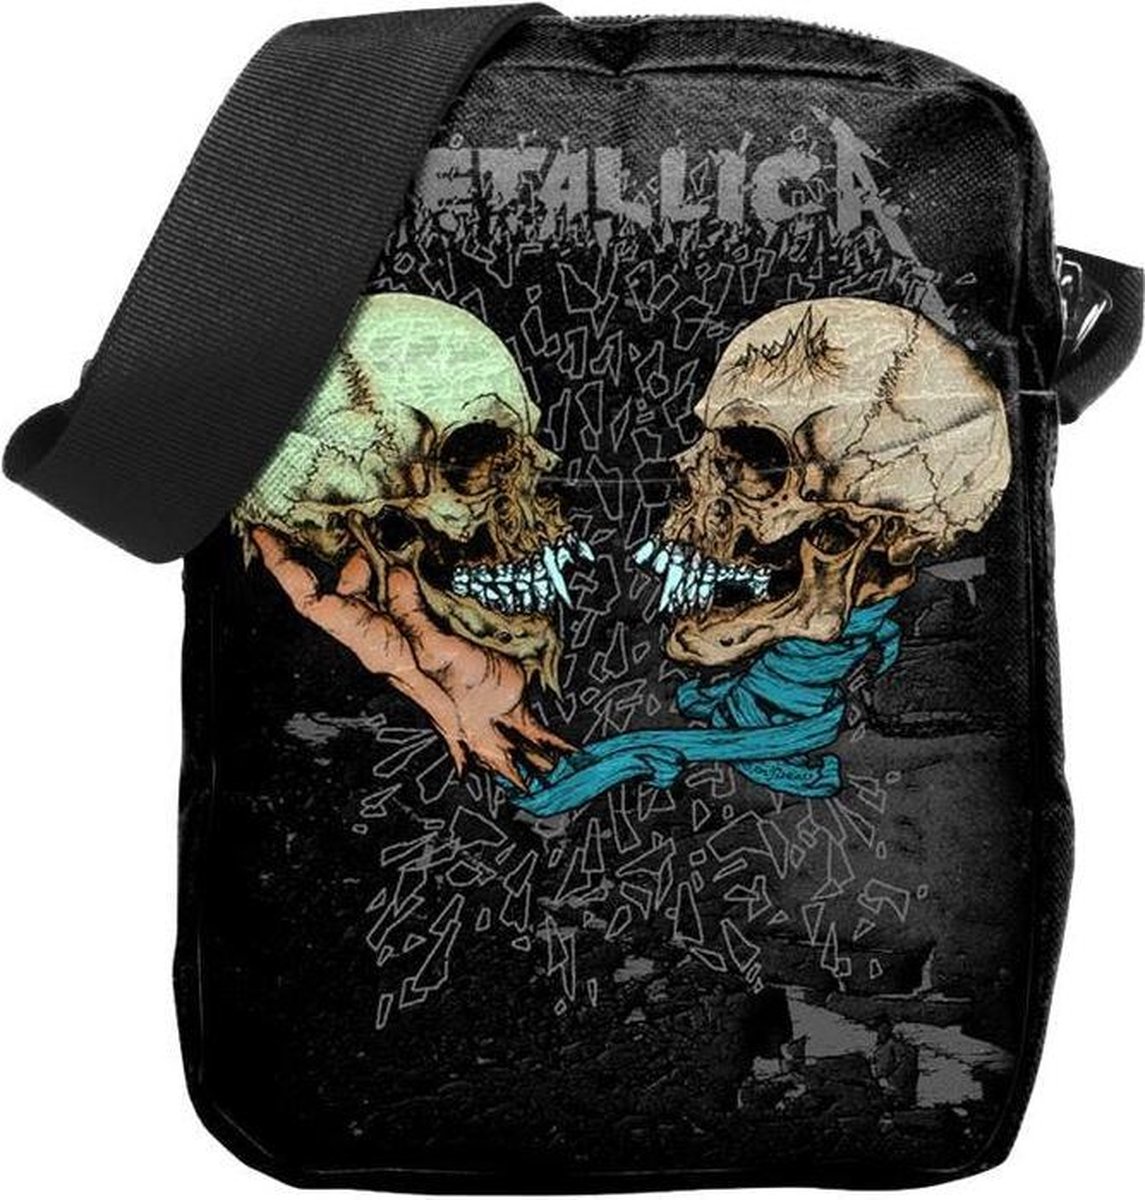 Metallica cross body bag - Sad Bad True